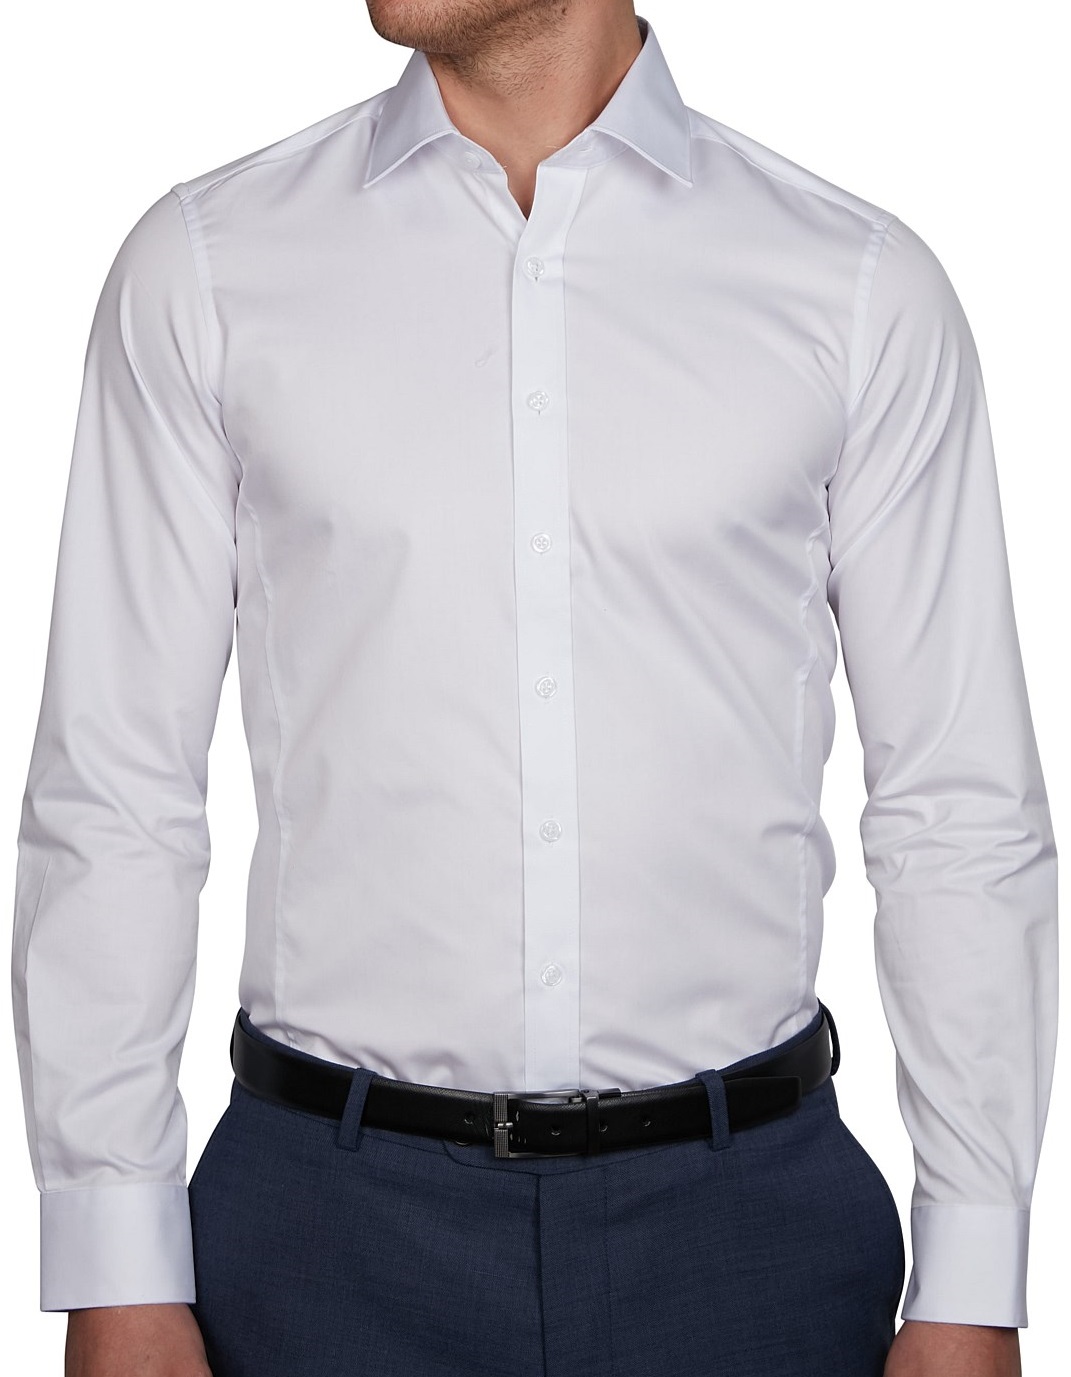 Geoffrey Beene Shirts Body Fit Non Iron White Shirt Buy Online